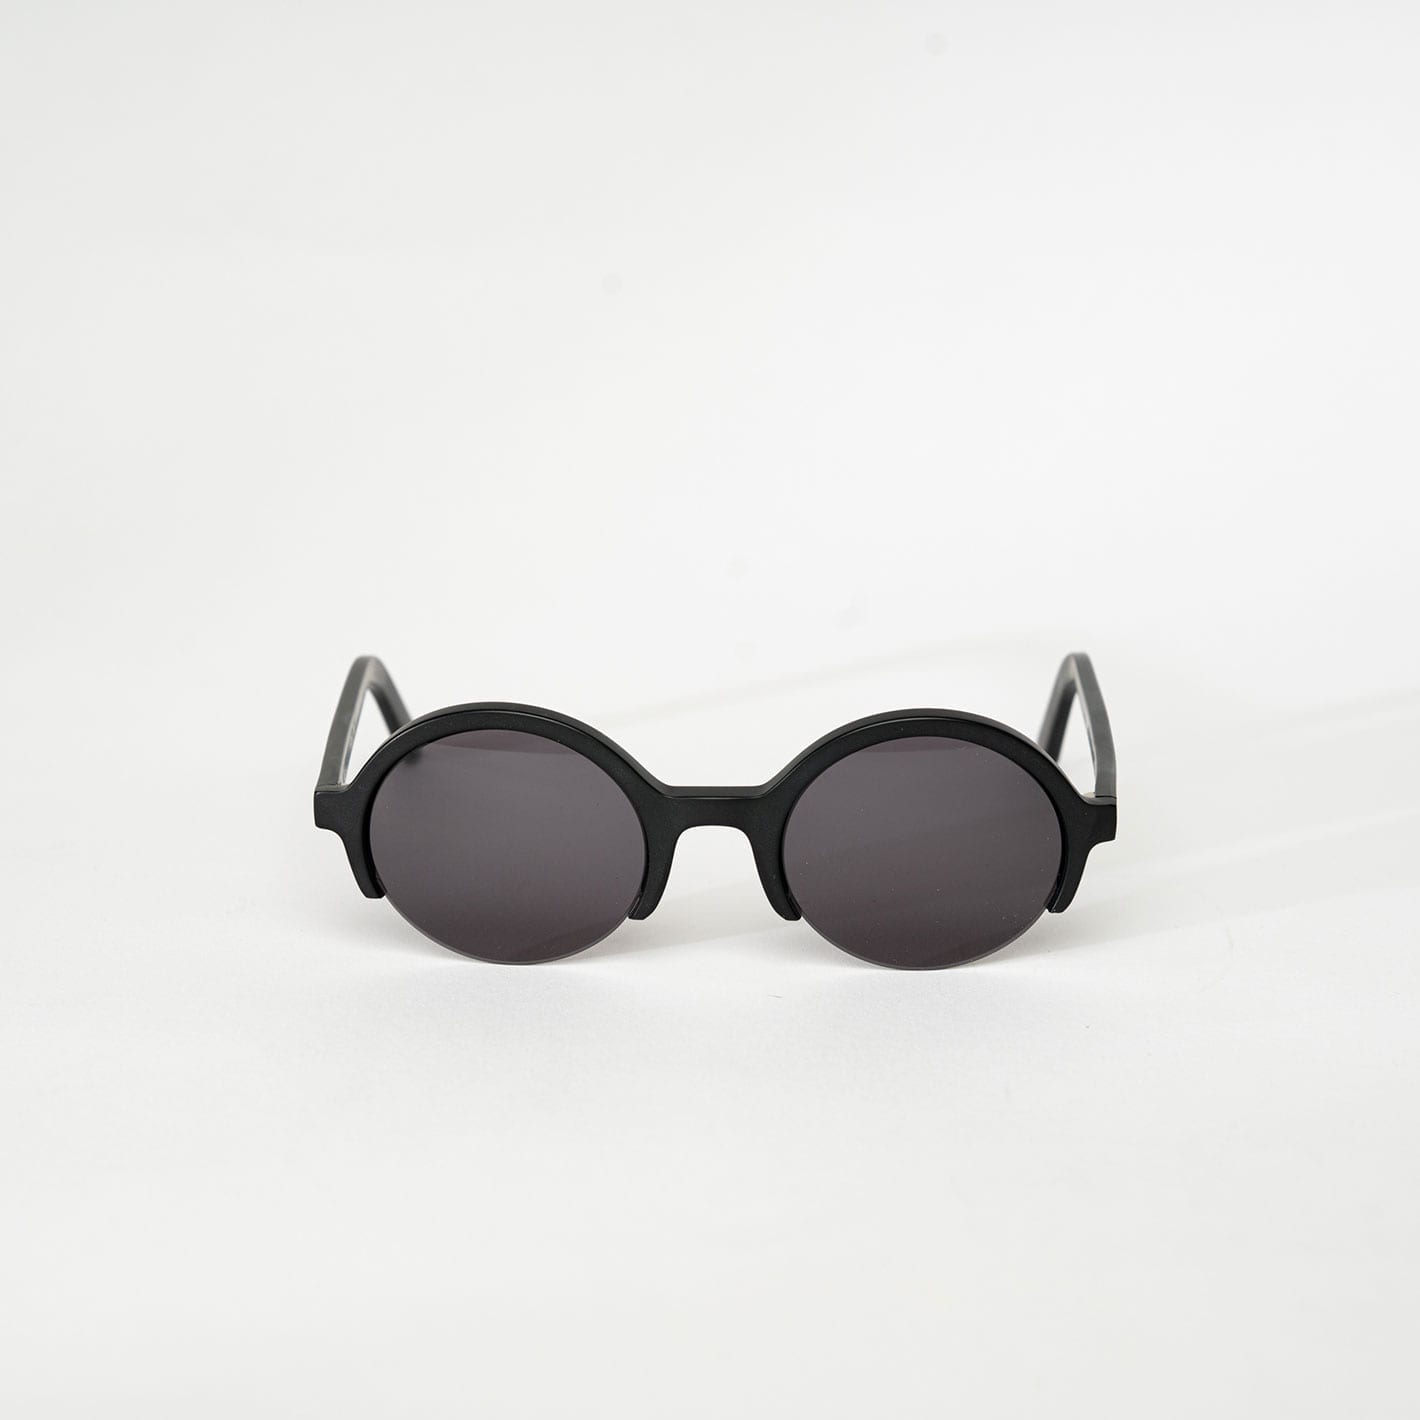 Sunglasses round | Appenzeller Gurt x ACC. HELVETICA | Sonnenbrillen